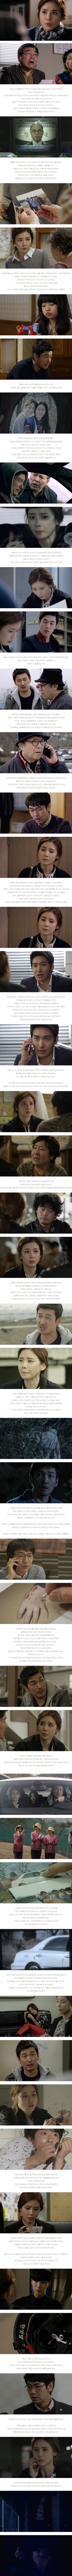 episode 10 captures for the Korean drama 'God's Gift - 14 Days'